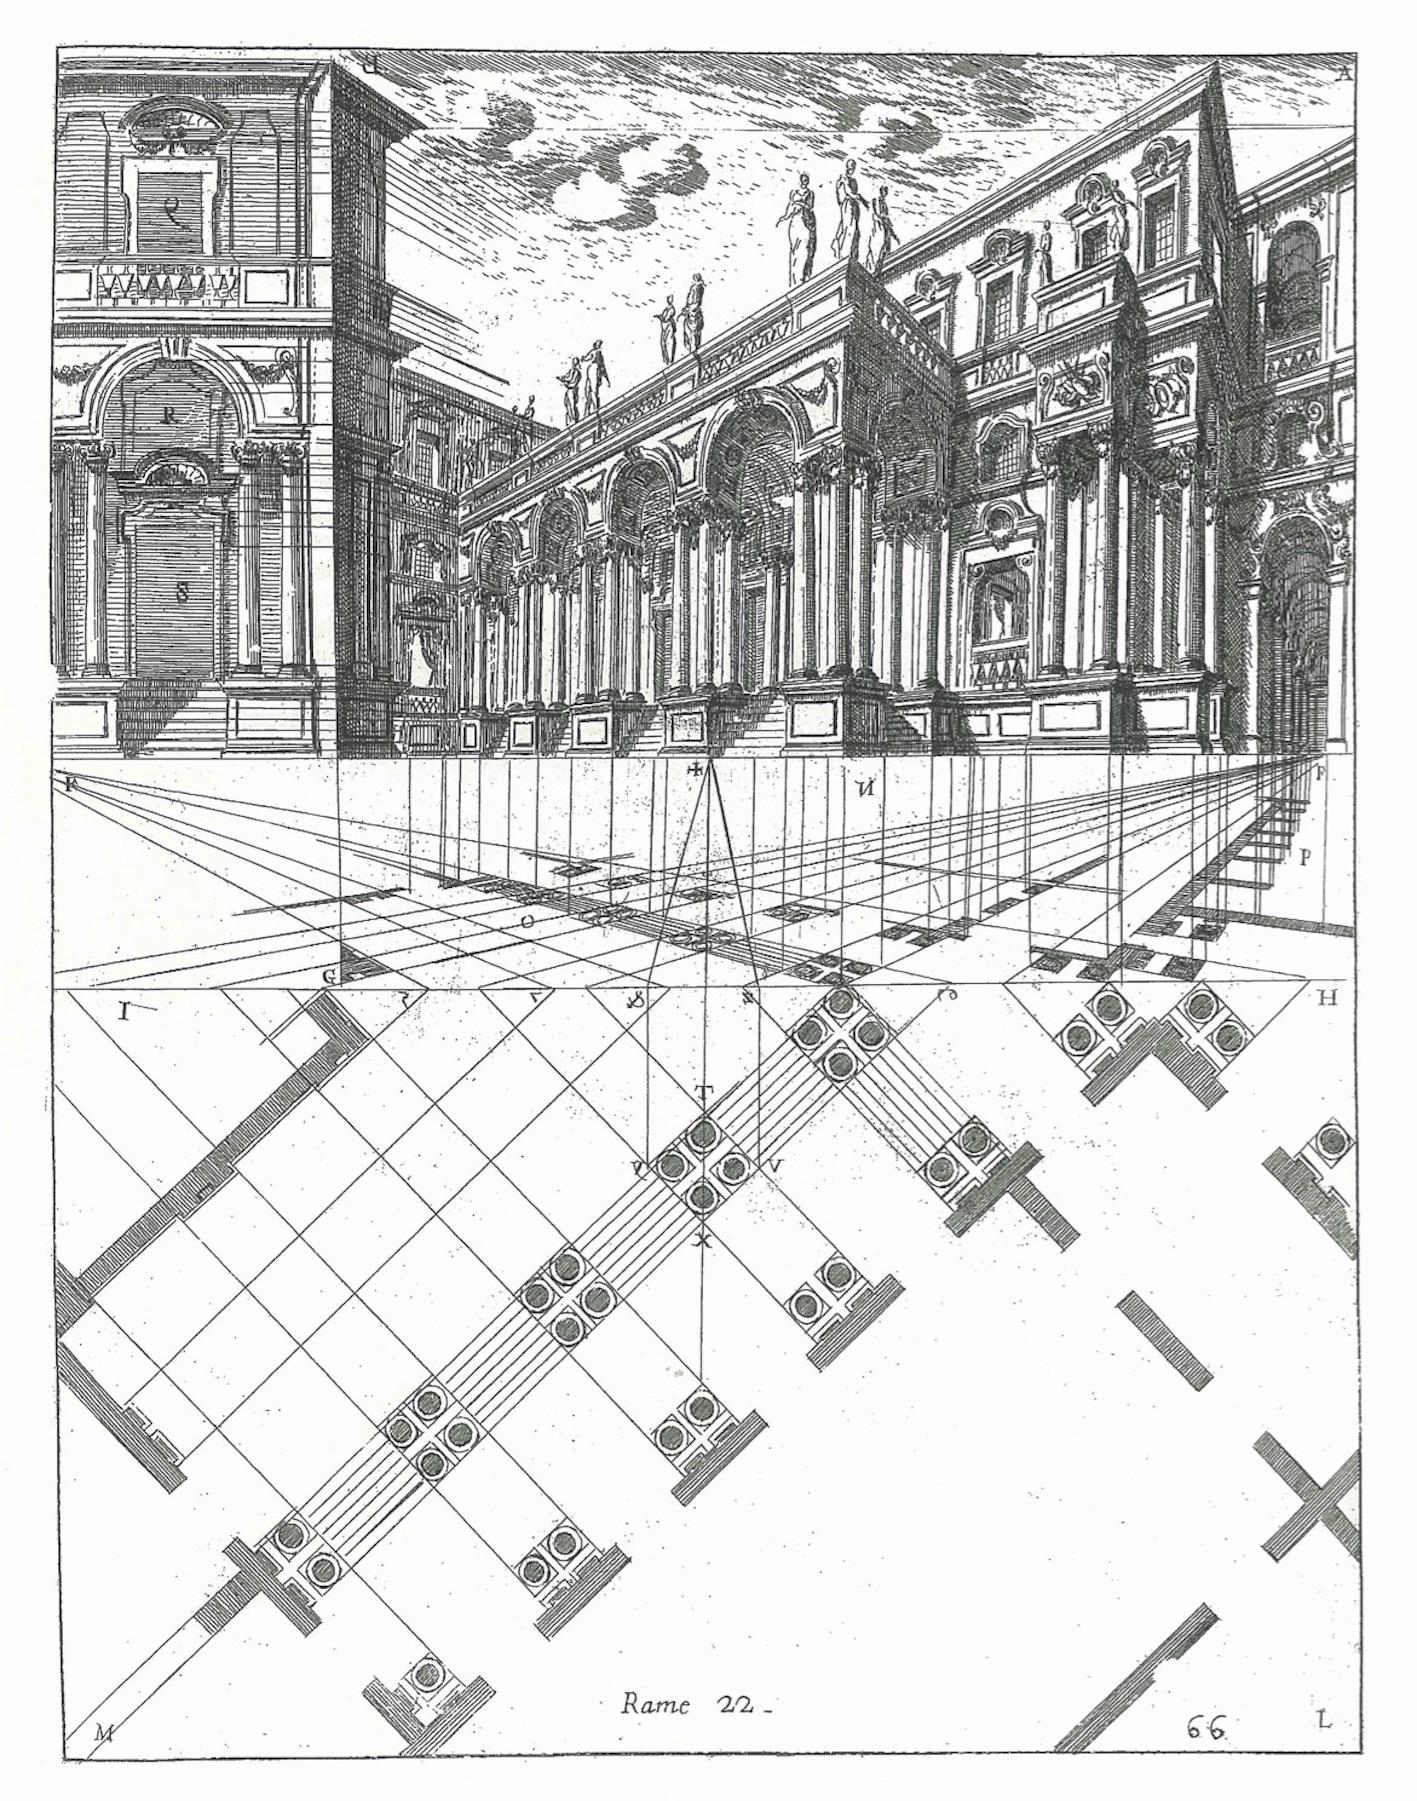 "Ferdinando Galli Bibbiena, L’architettura civile, Parma 1711, part fourth, plate 22."